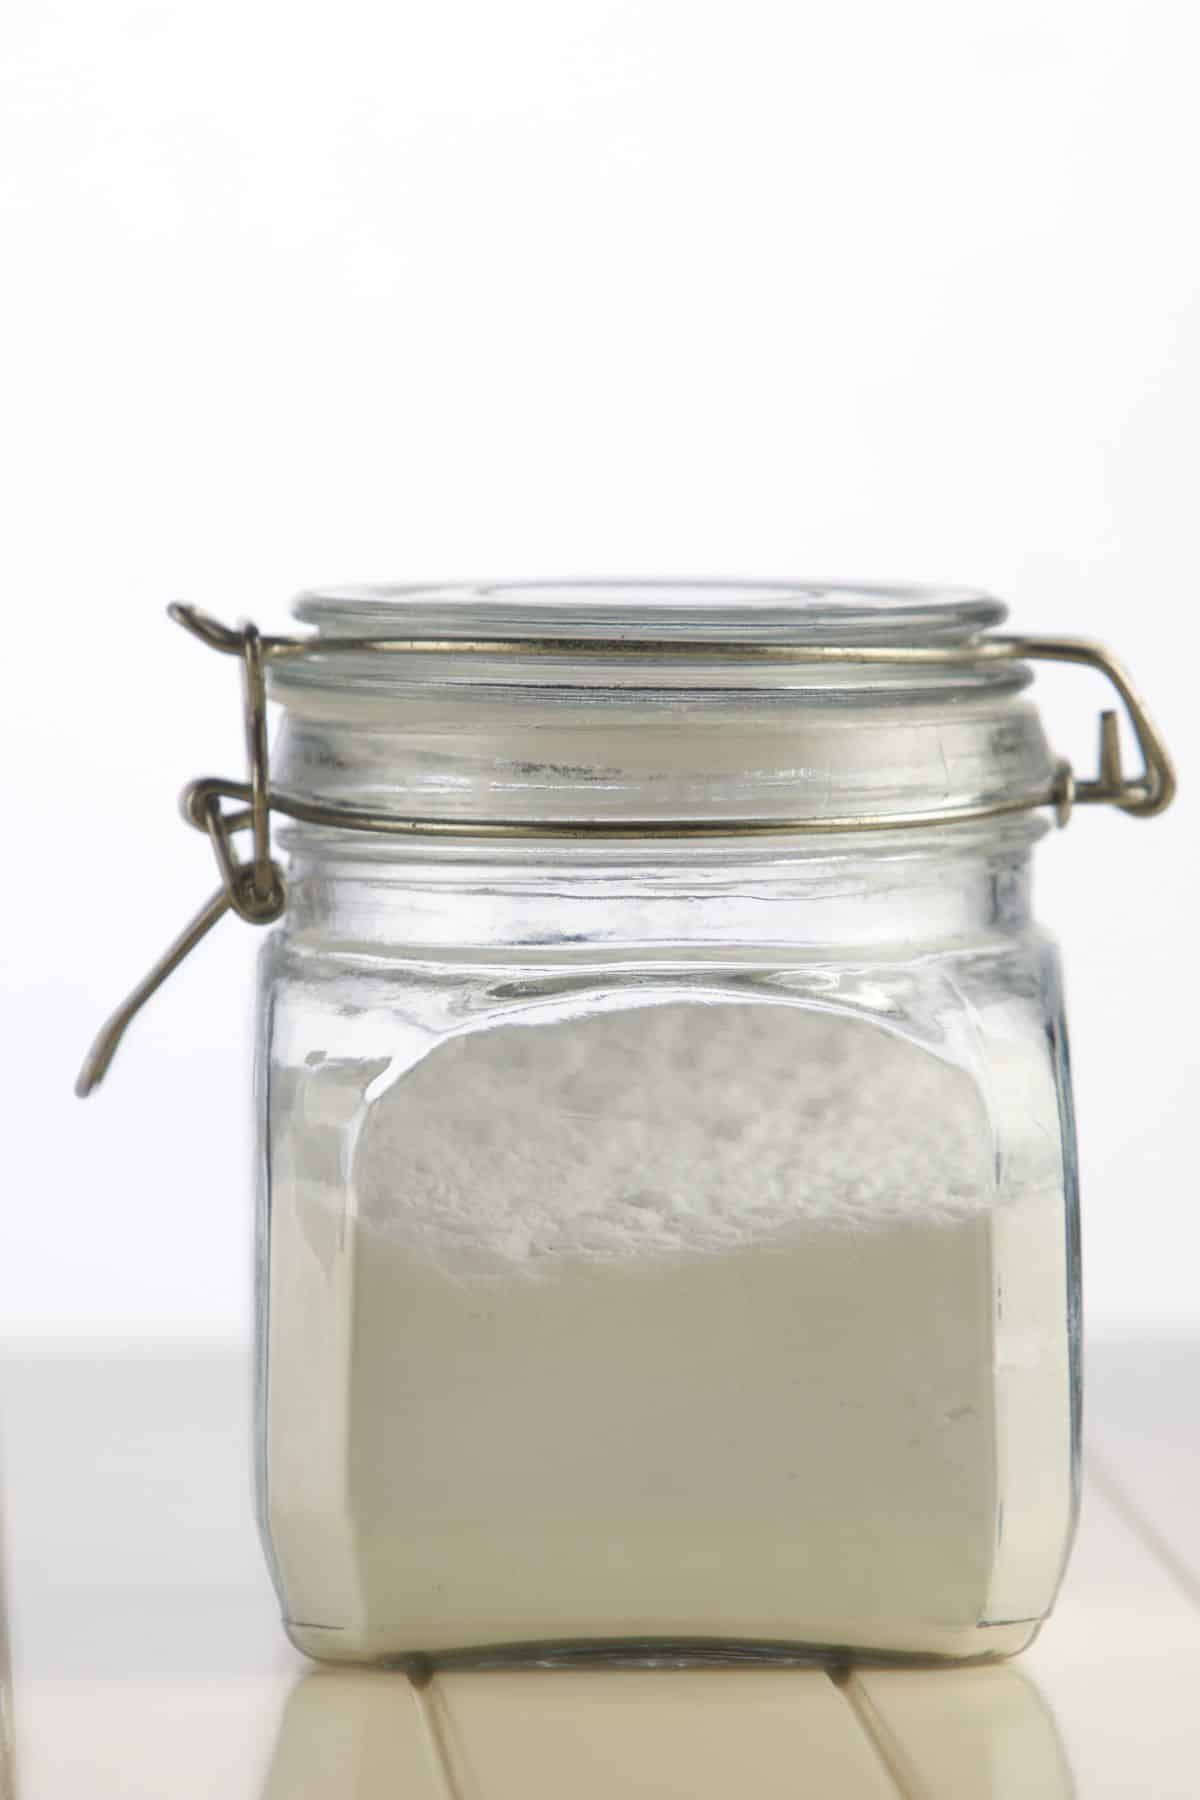 A small mason jar of maltodextrin.